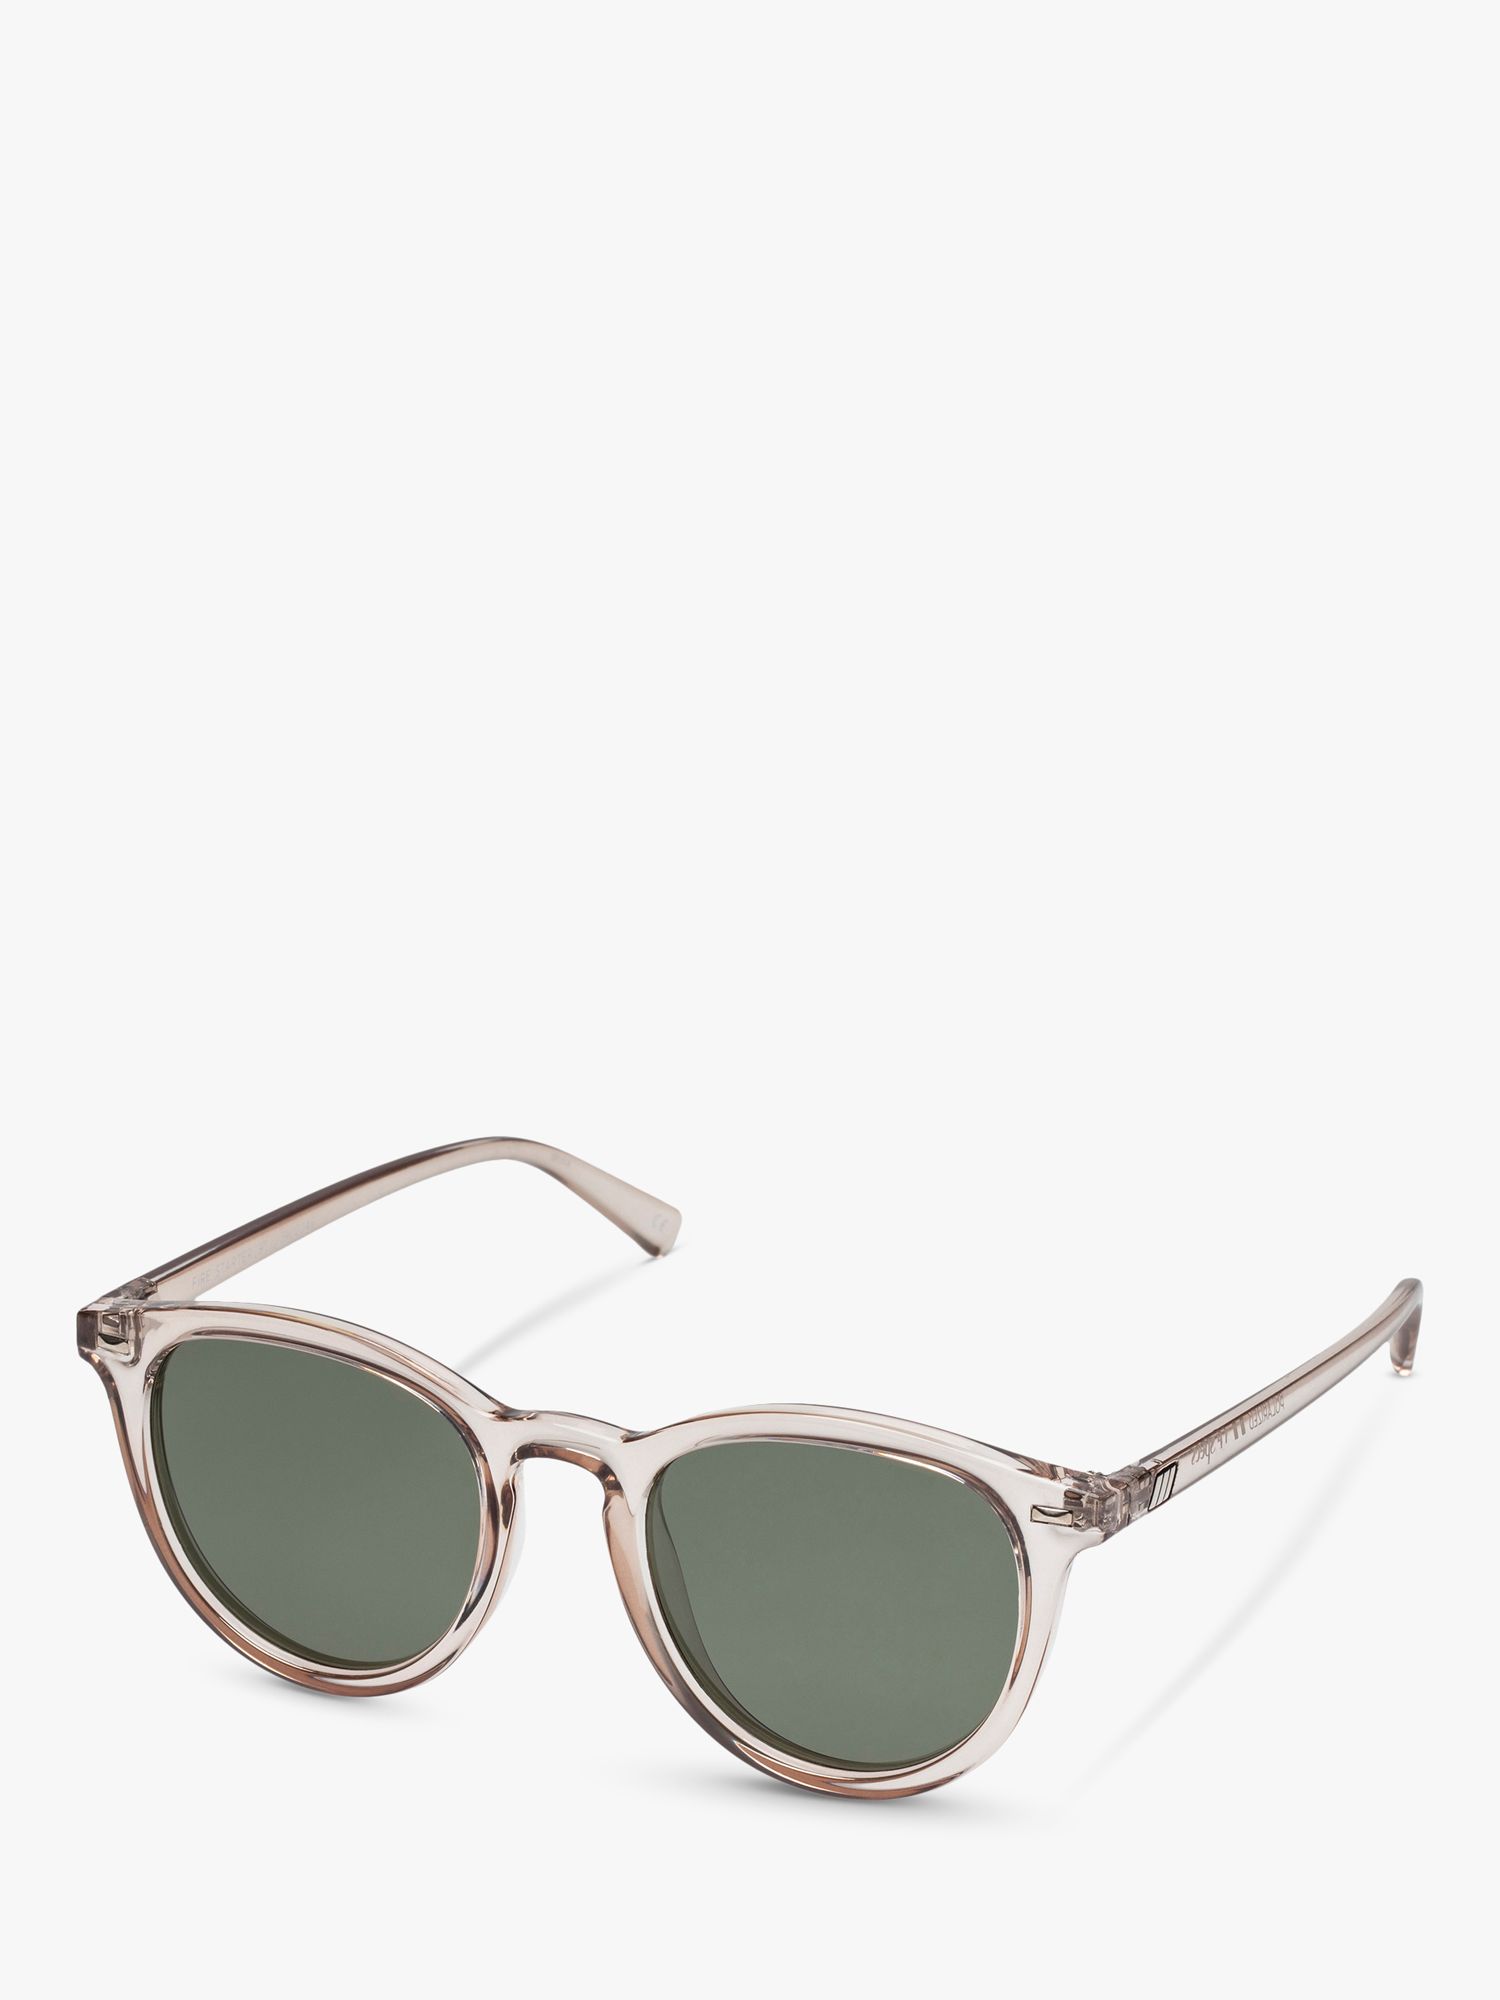 Le Specs L5000148 Unisex Polarised Oval Sunglasses, Clear/Brown